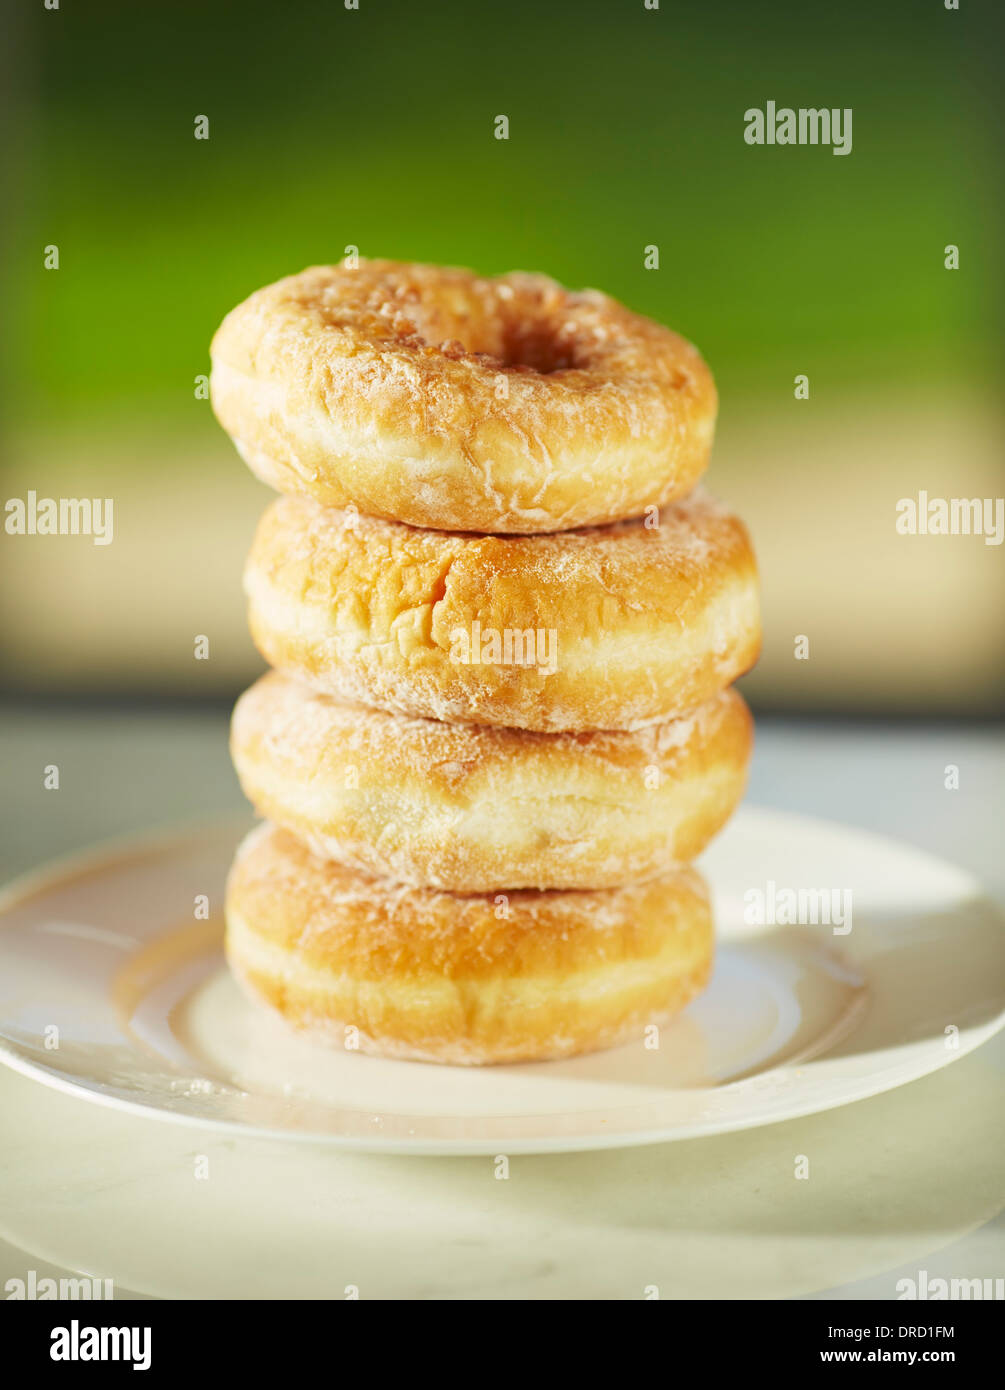 Sugar coated Doughnuts Stock Photo